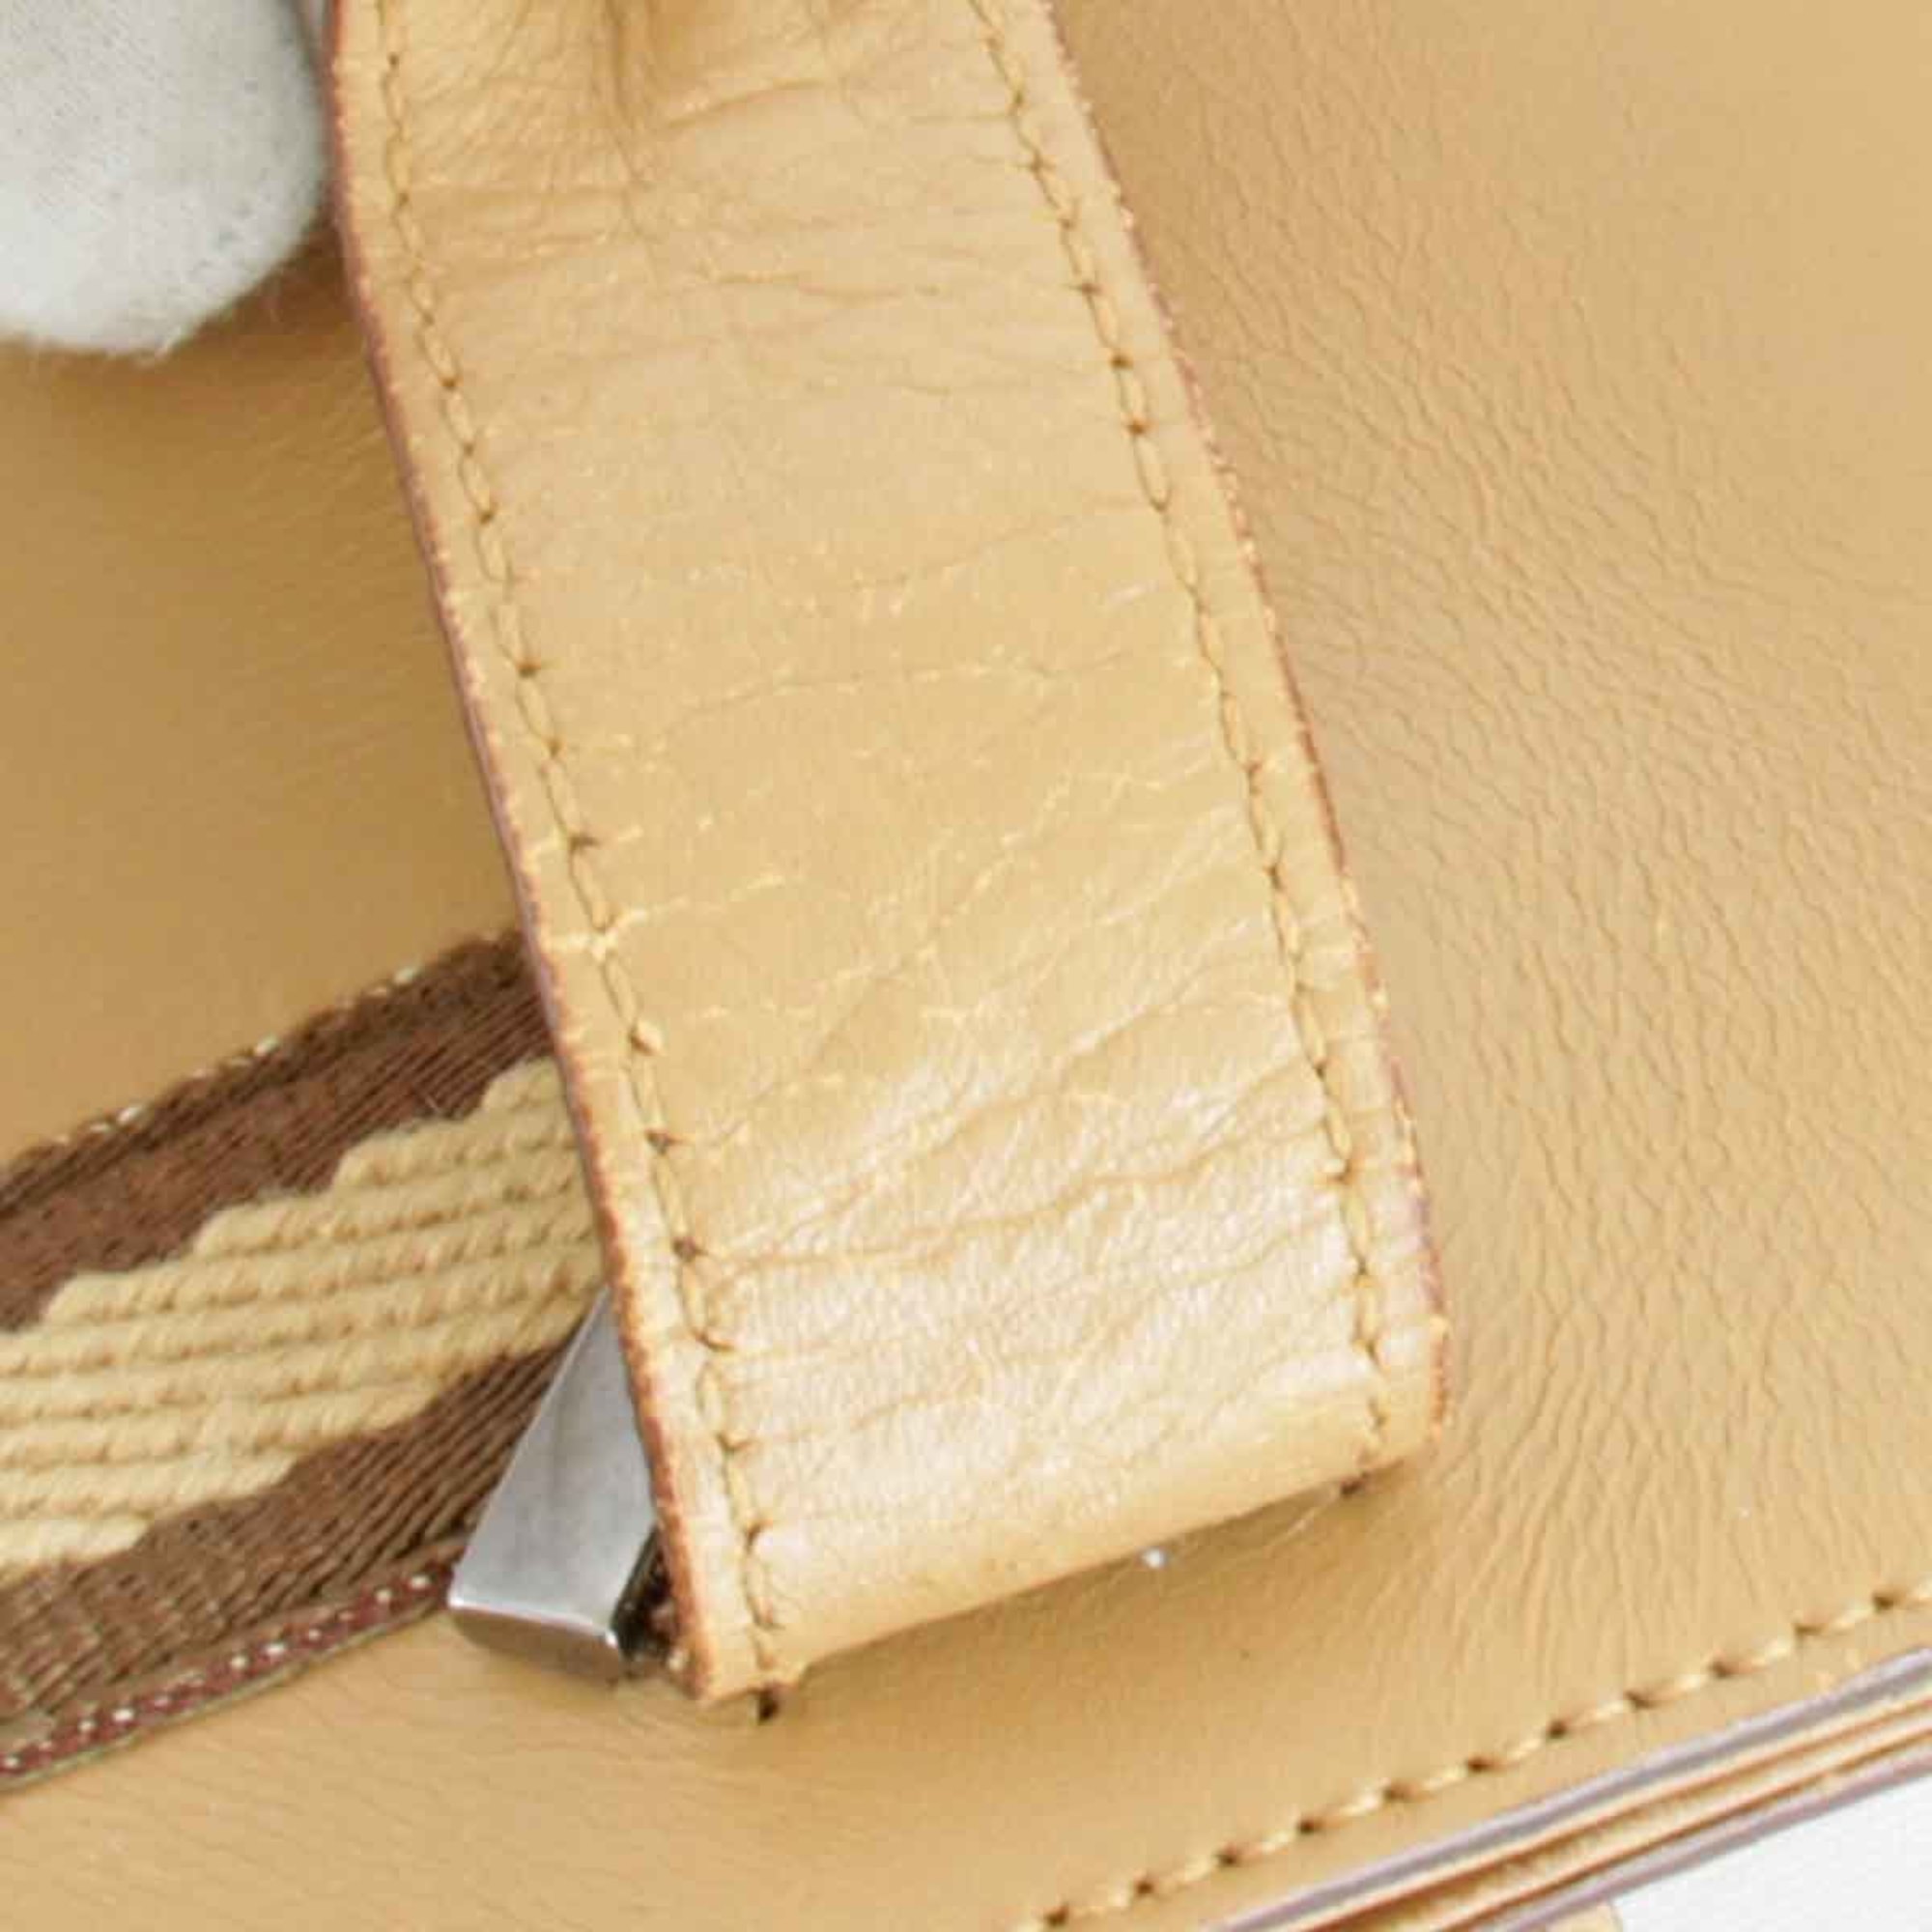 GUCCI 000・0860 1705 Handbag Leather Camel Ladies